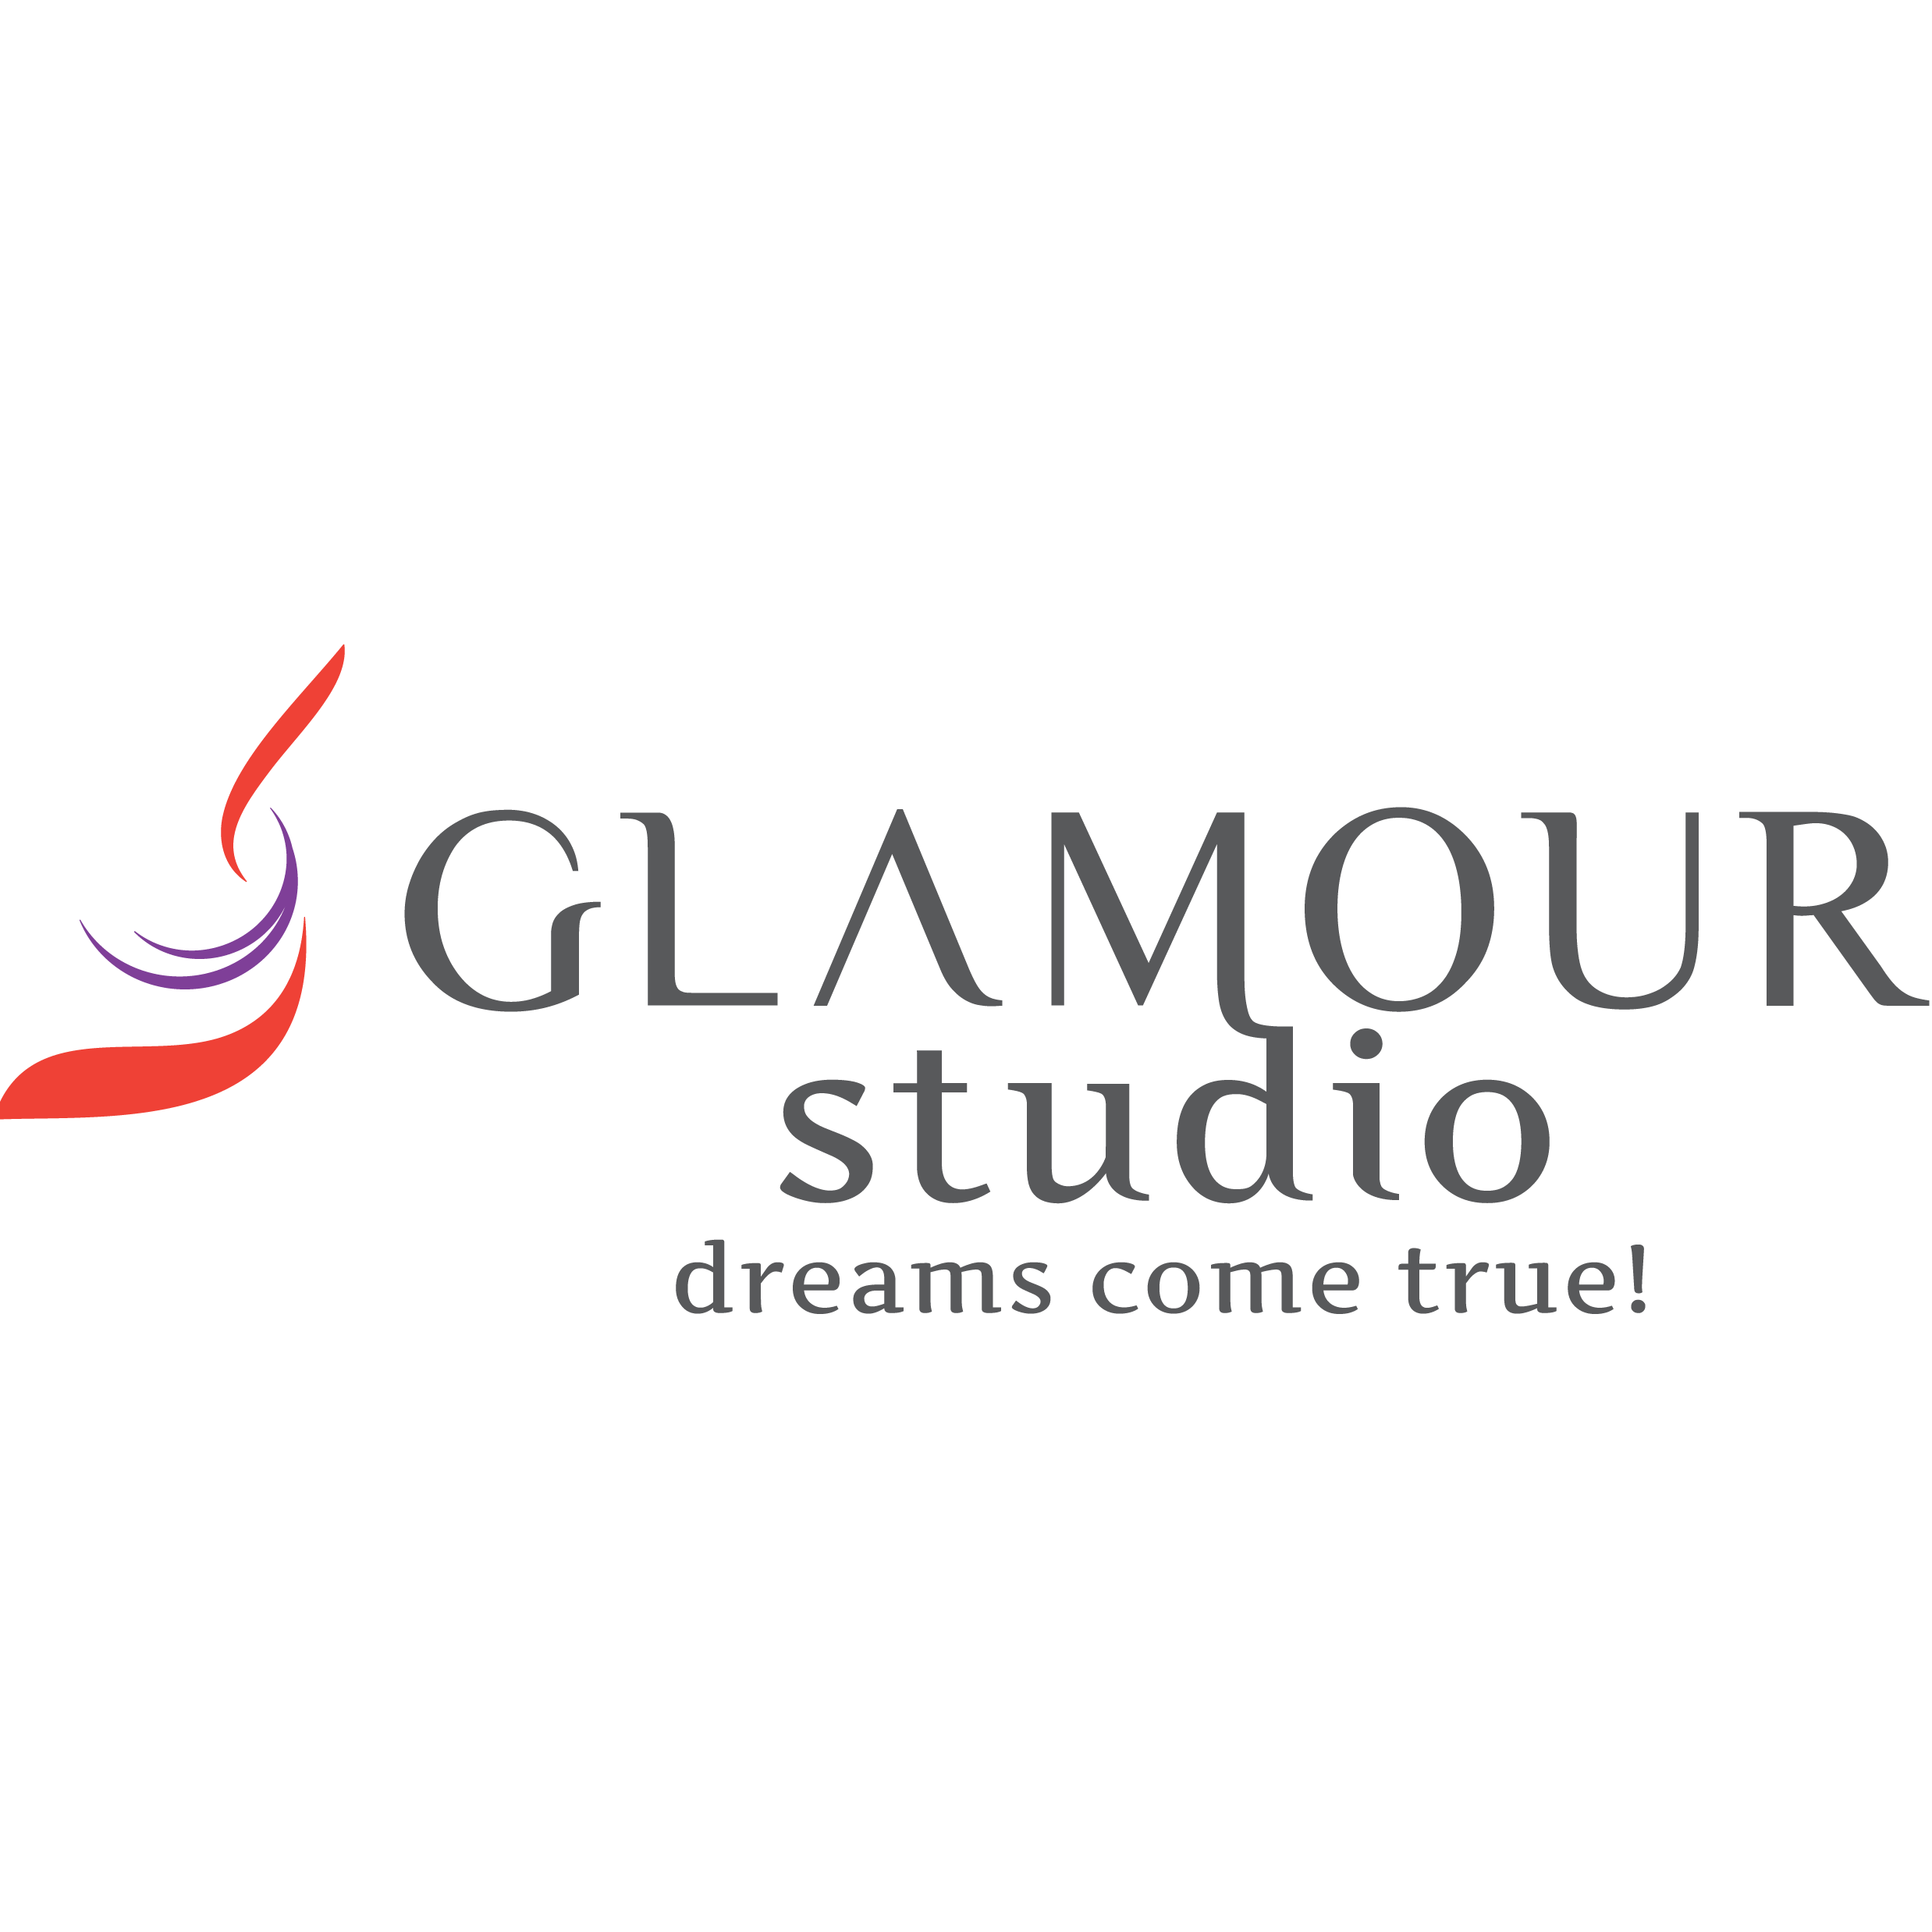 Videochat Glamour Studio Bucuresti, one of the most famous and successful cam studios in Romania #camstudio #models #europeancamstudio2018